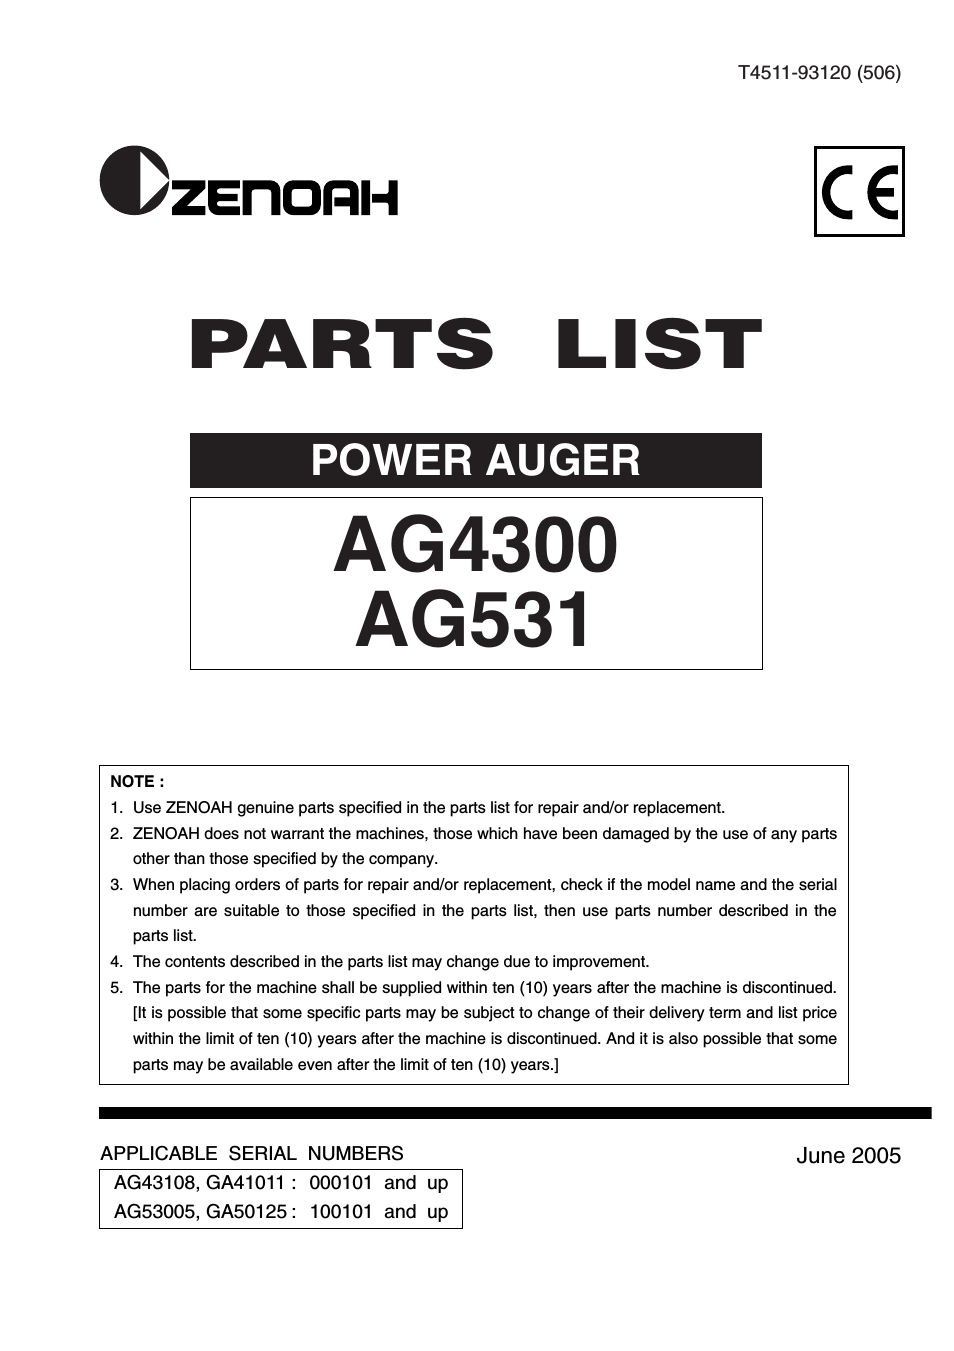 POWER AUGER AG531